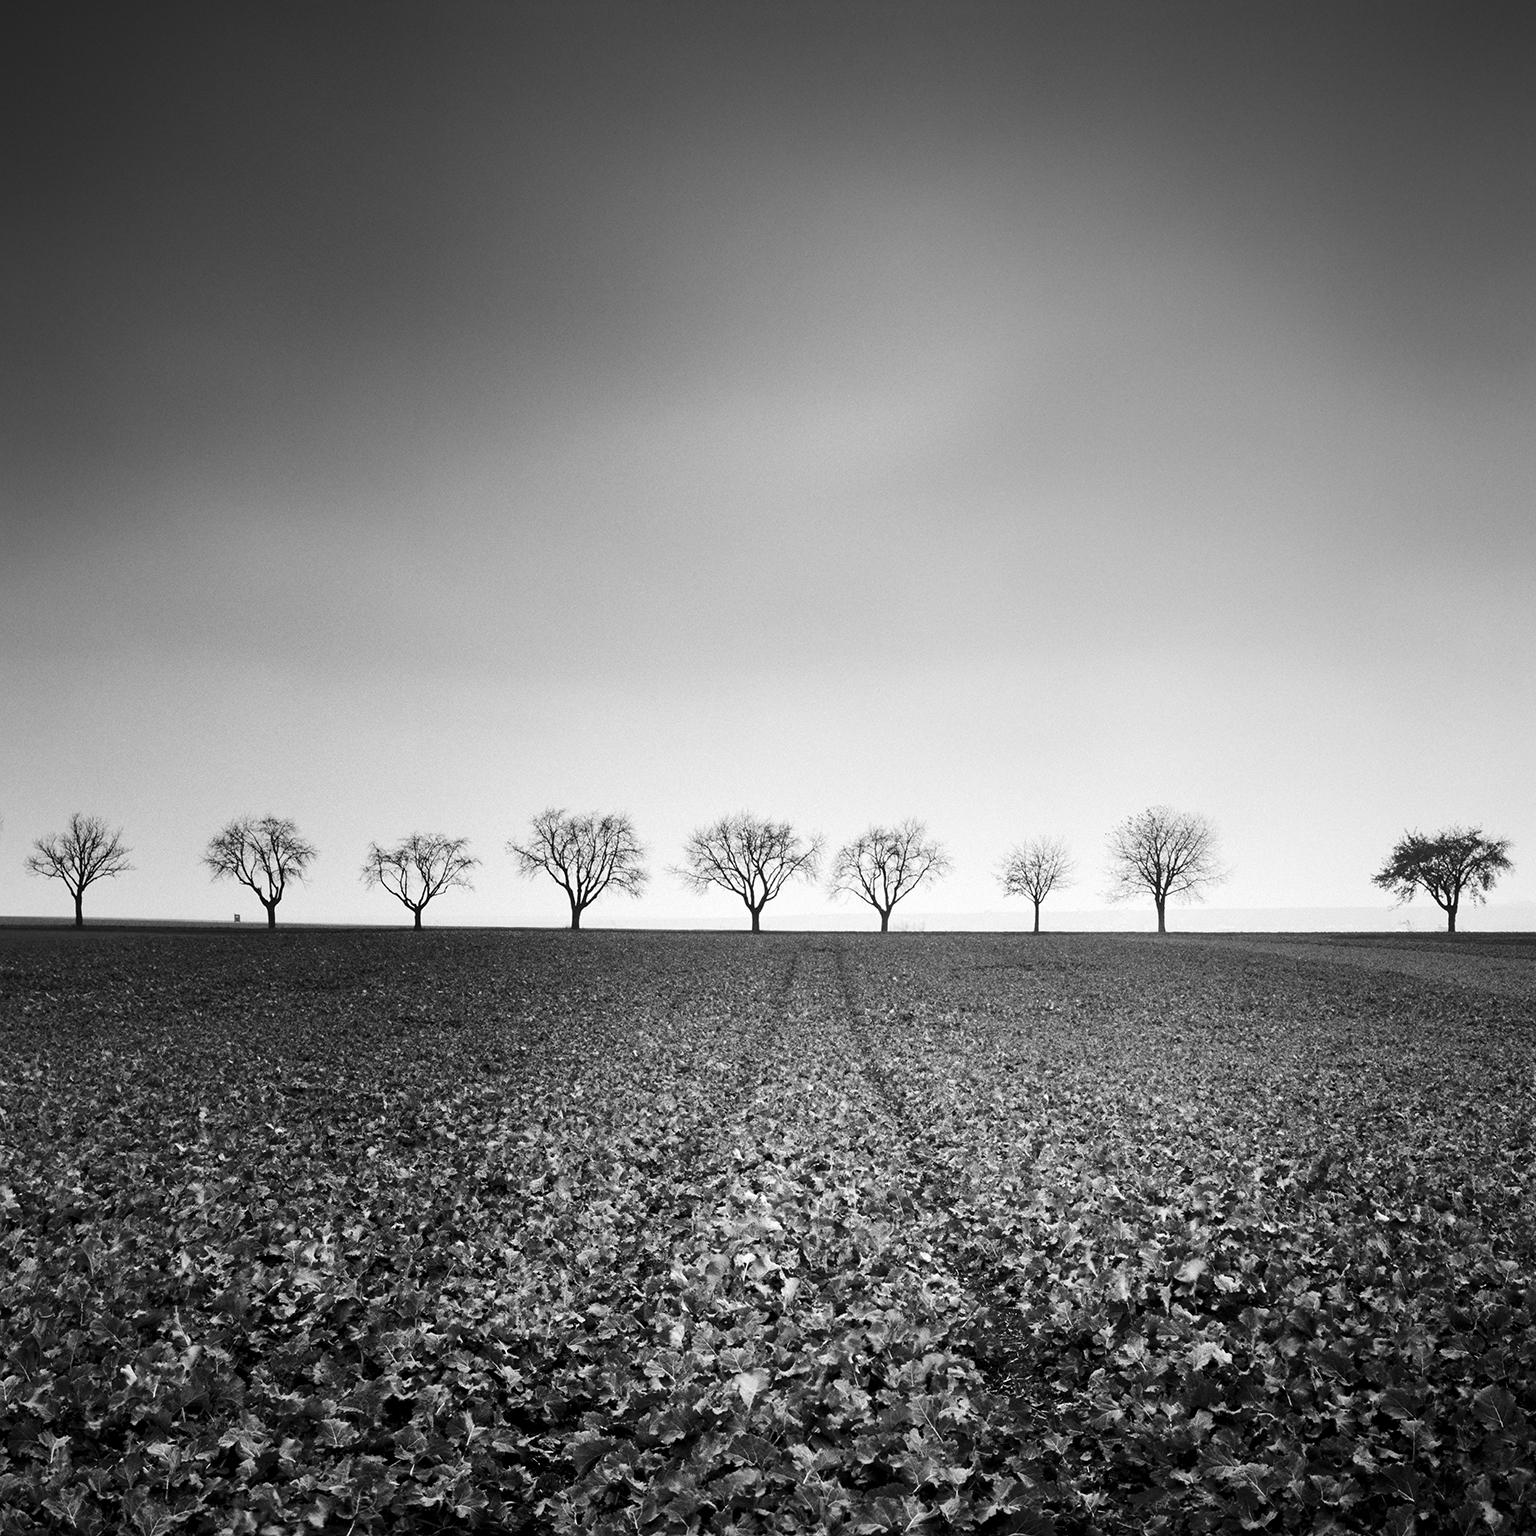 Nine Cherry Trees, Avenue, Austria, art black and white photography, landscape